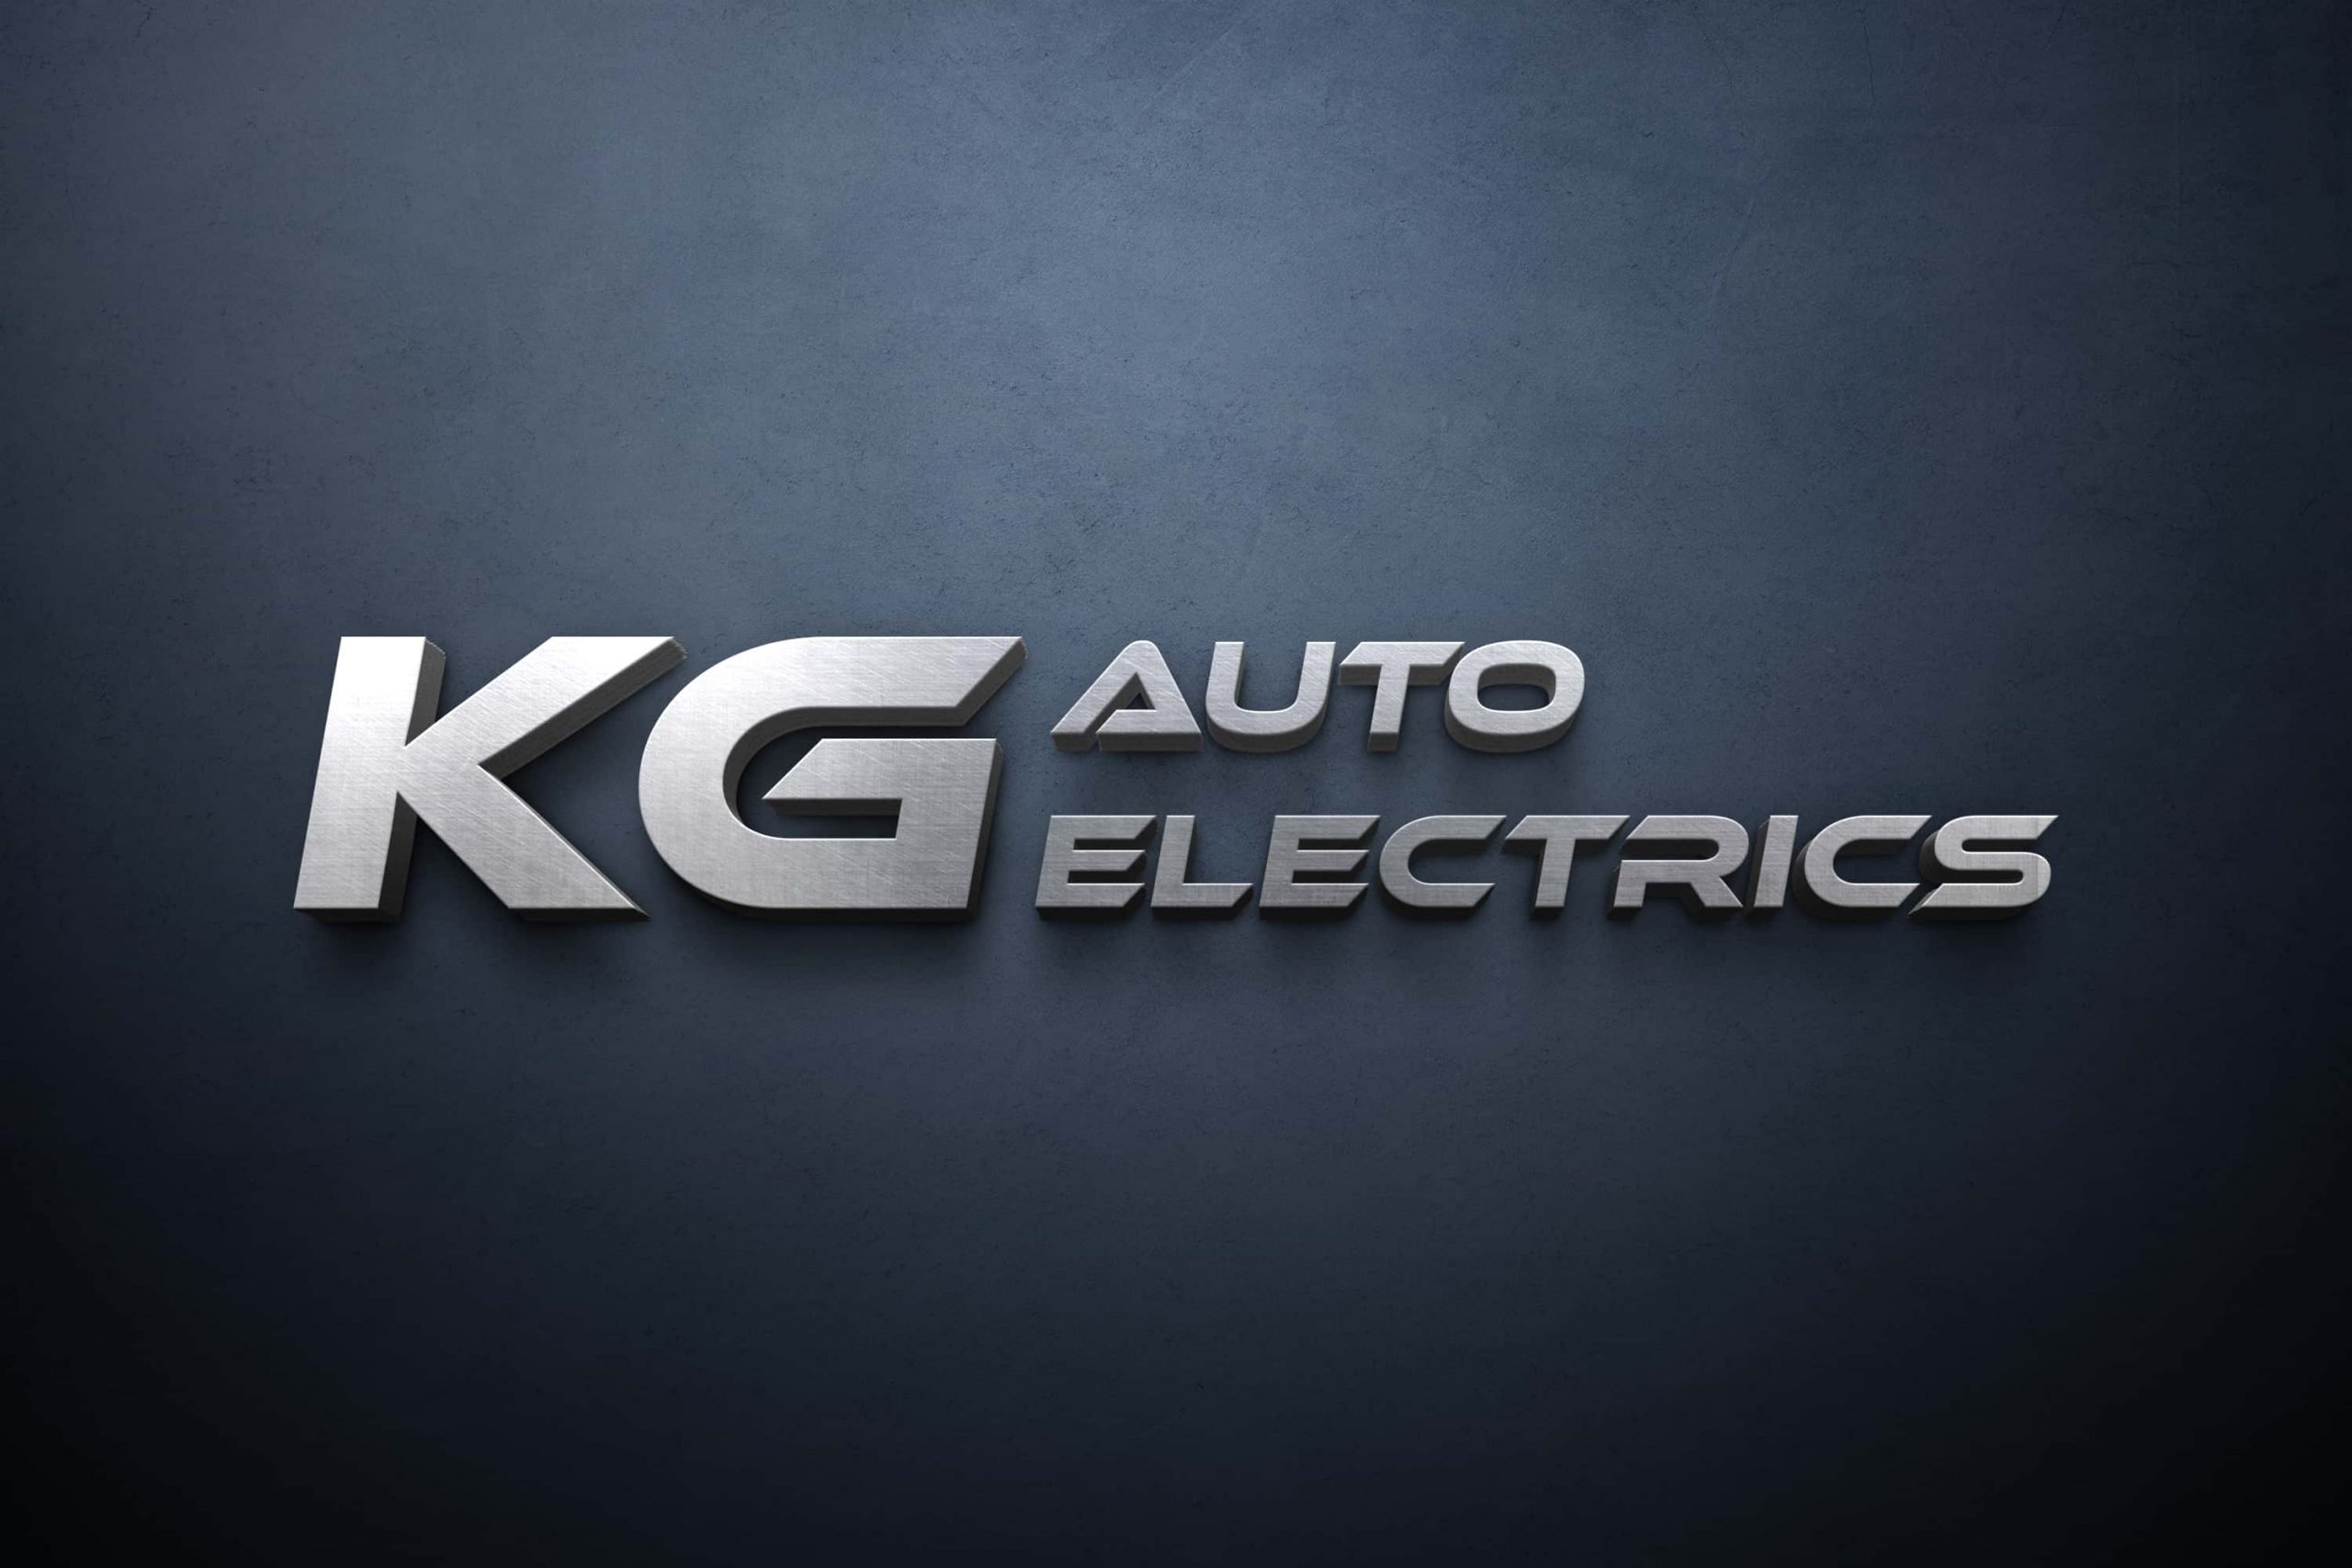 kg auto electrics